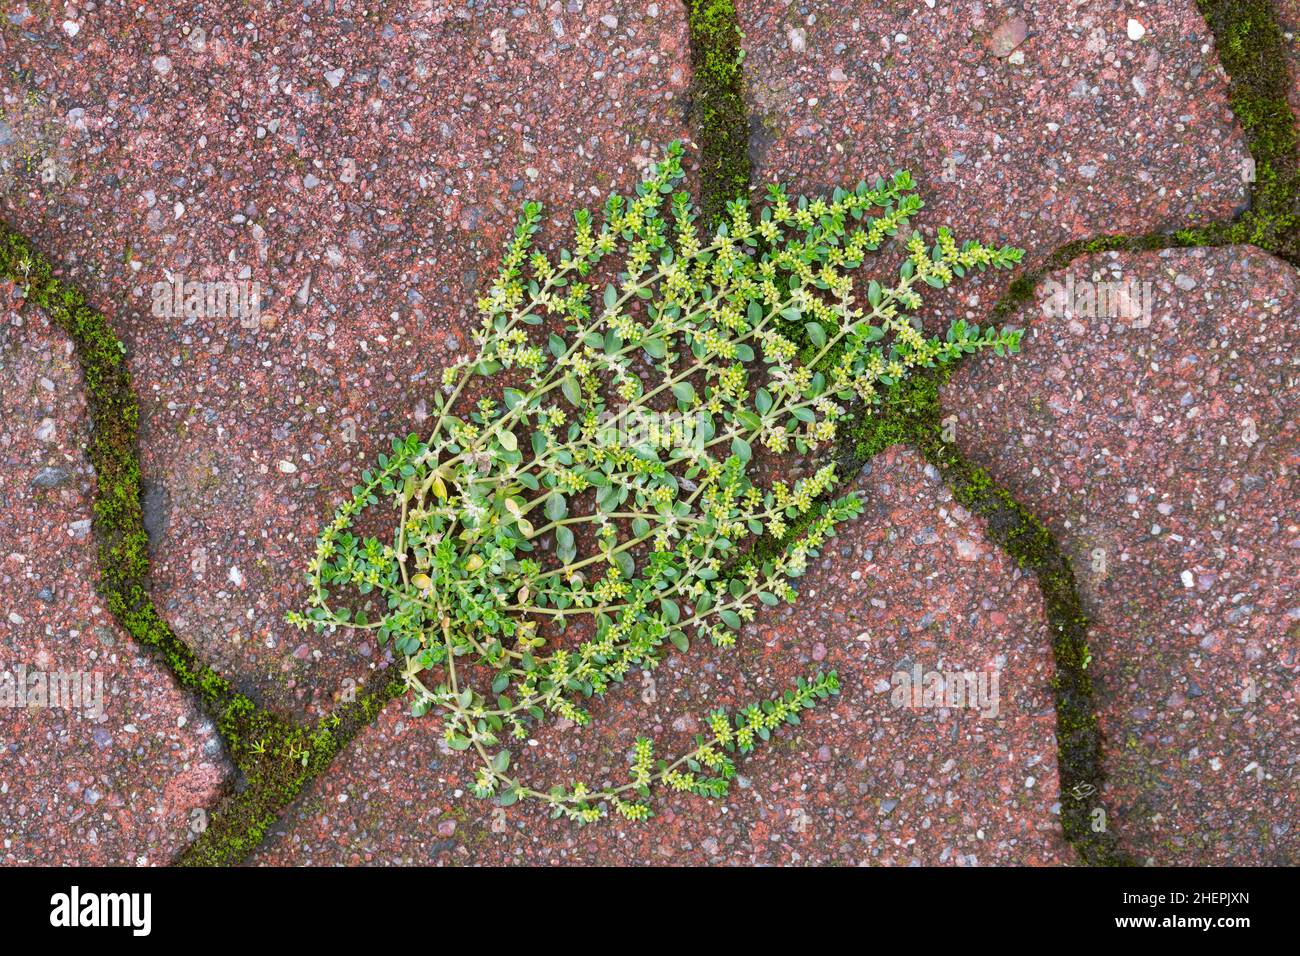 Smooth rupturewort, Smooth burstwort (Herniaria glabra), growing on a pavement, Germany Stock Photo